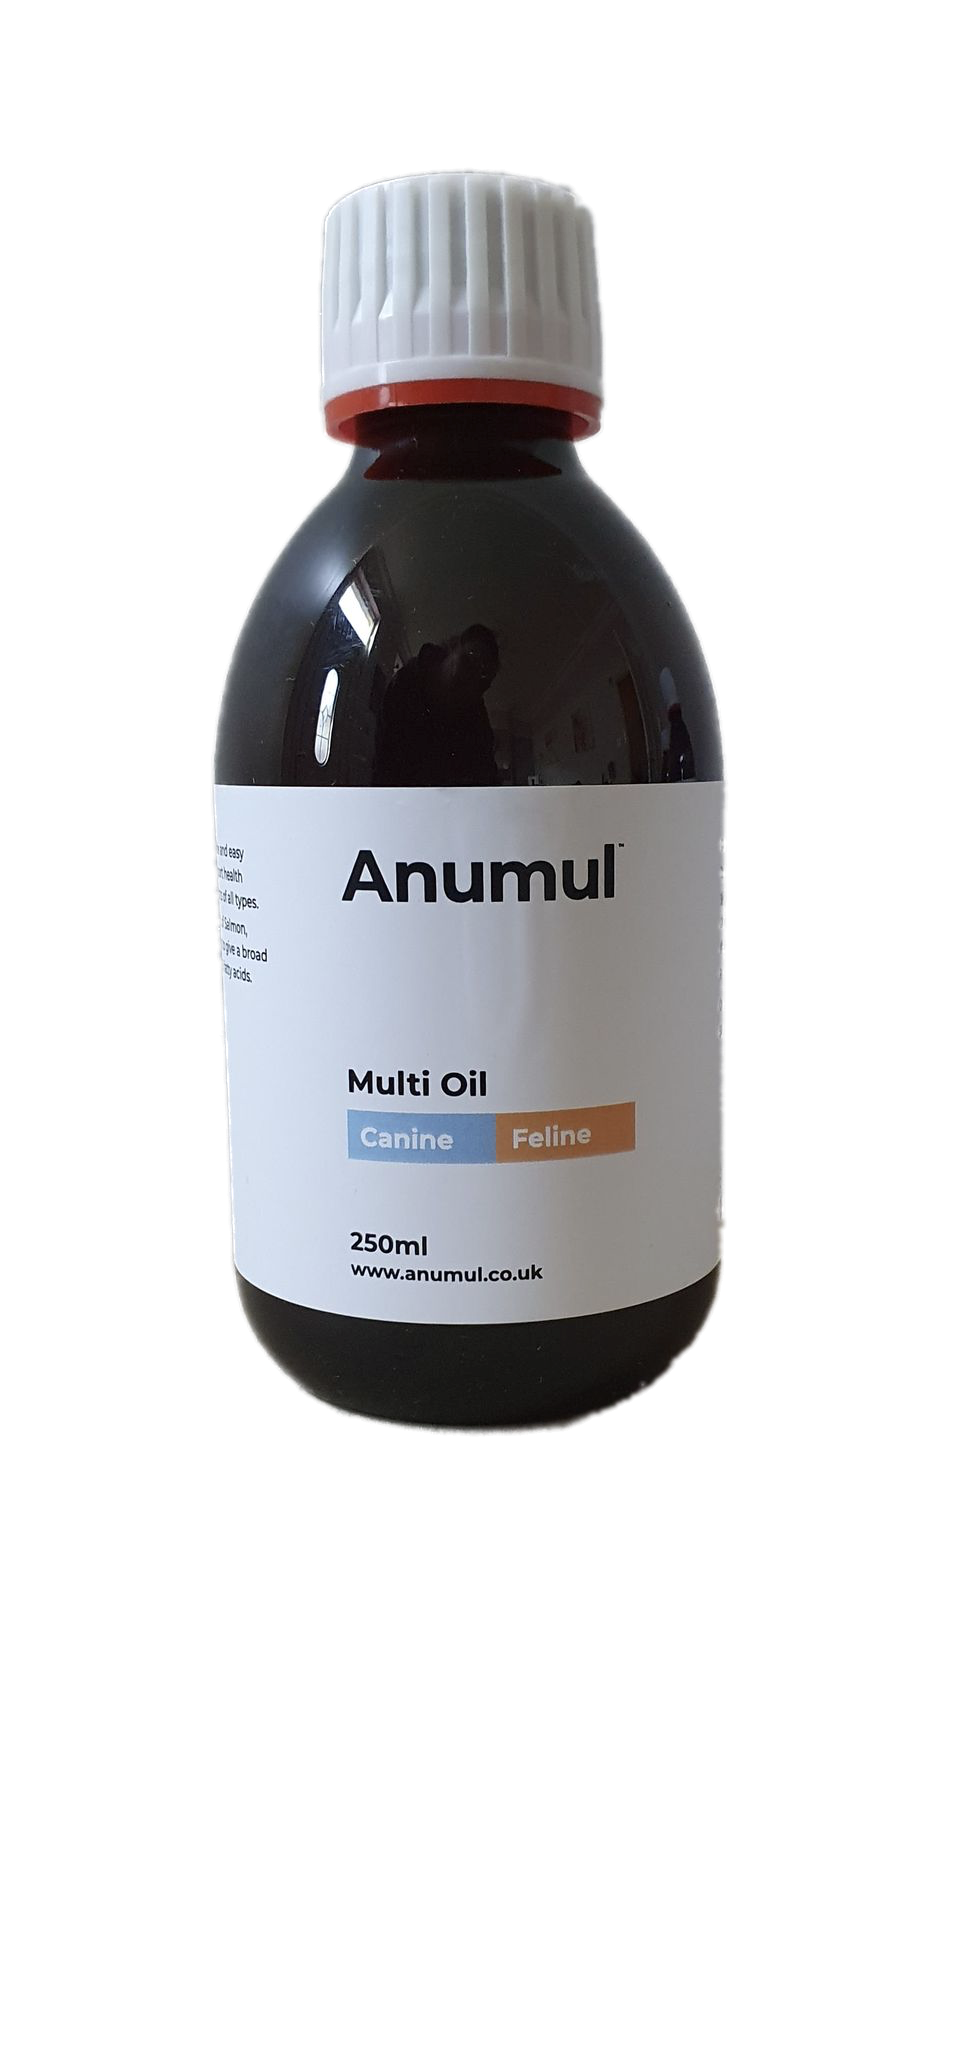 King K9 | Anumul Multi Oil 250ml (Canine | Feline)